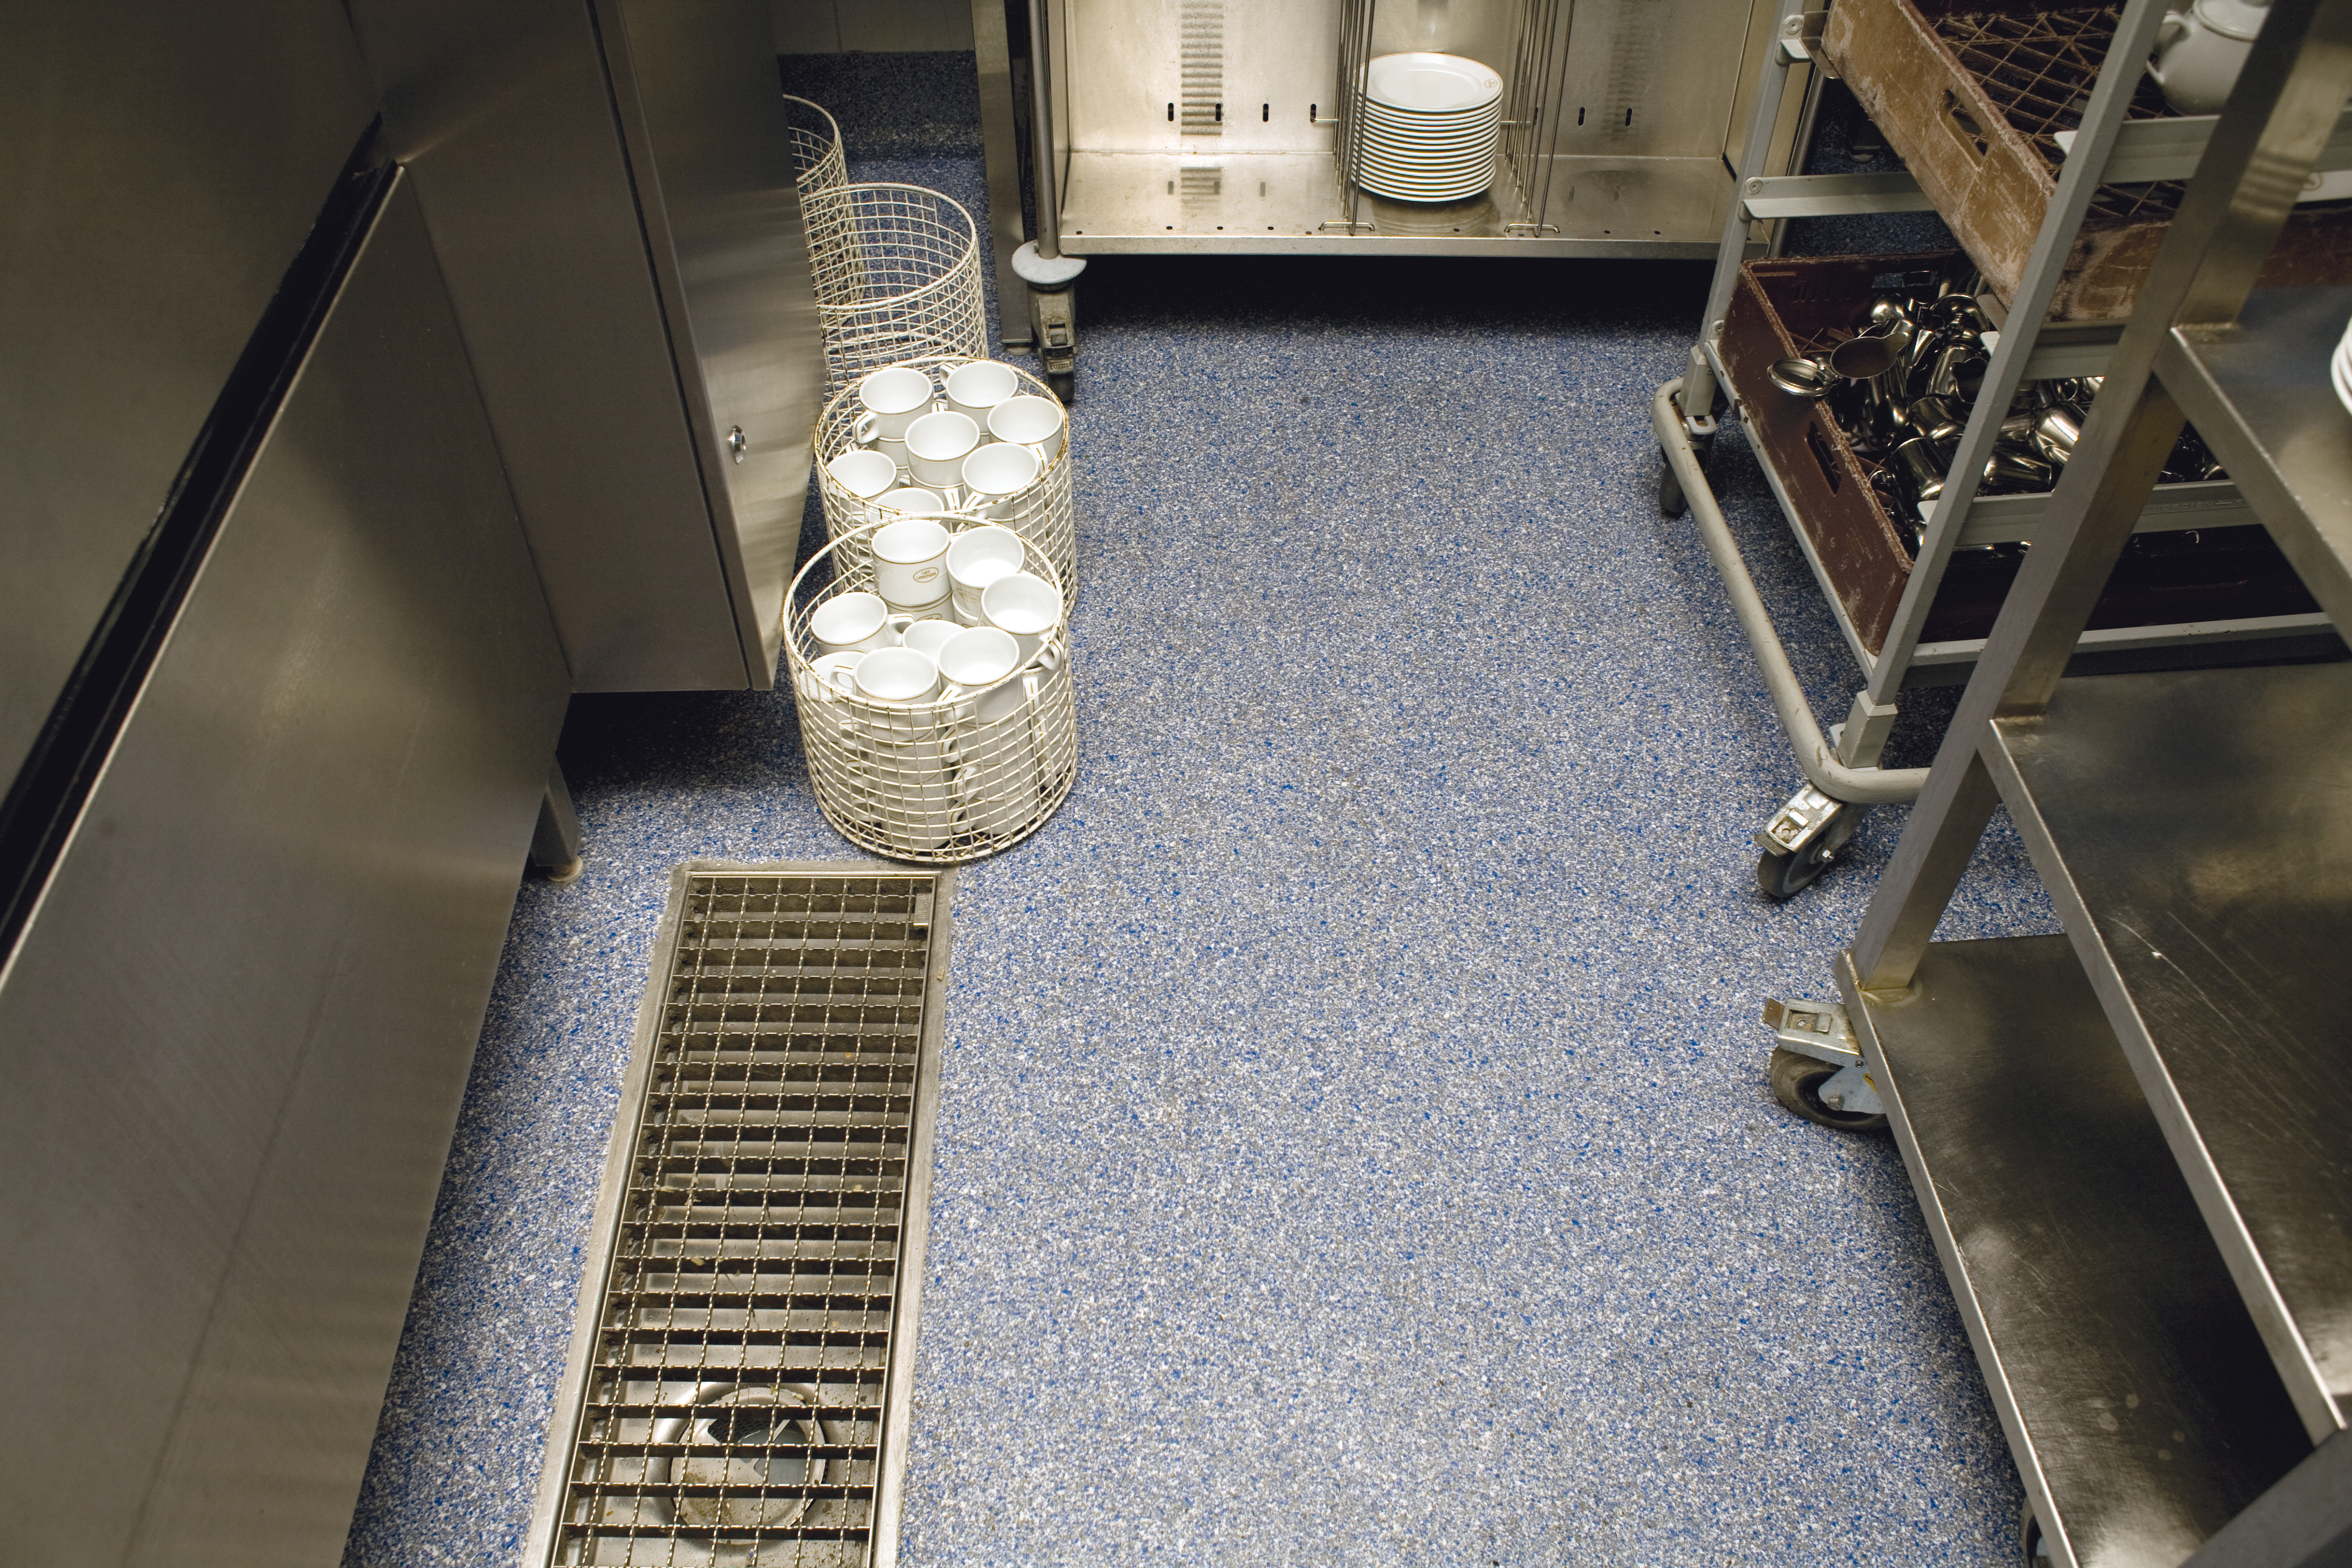 Commercial Kitchen Flooring Best, Commercial Kitchen Floor Tile